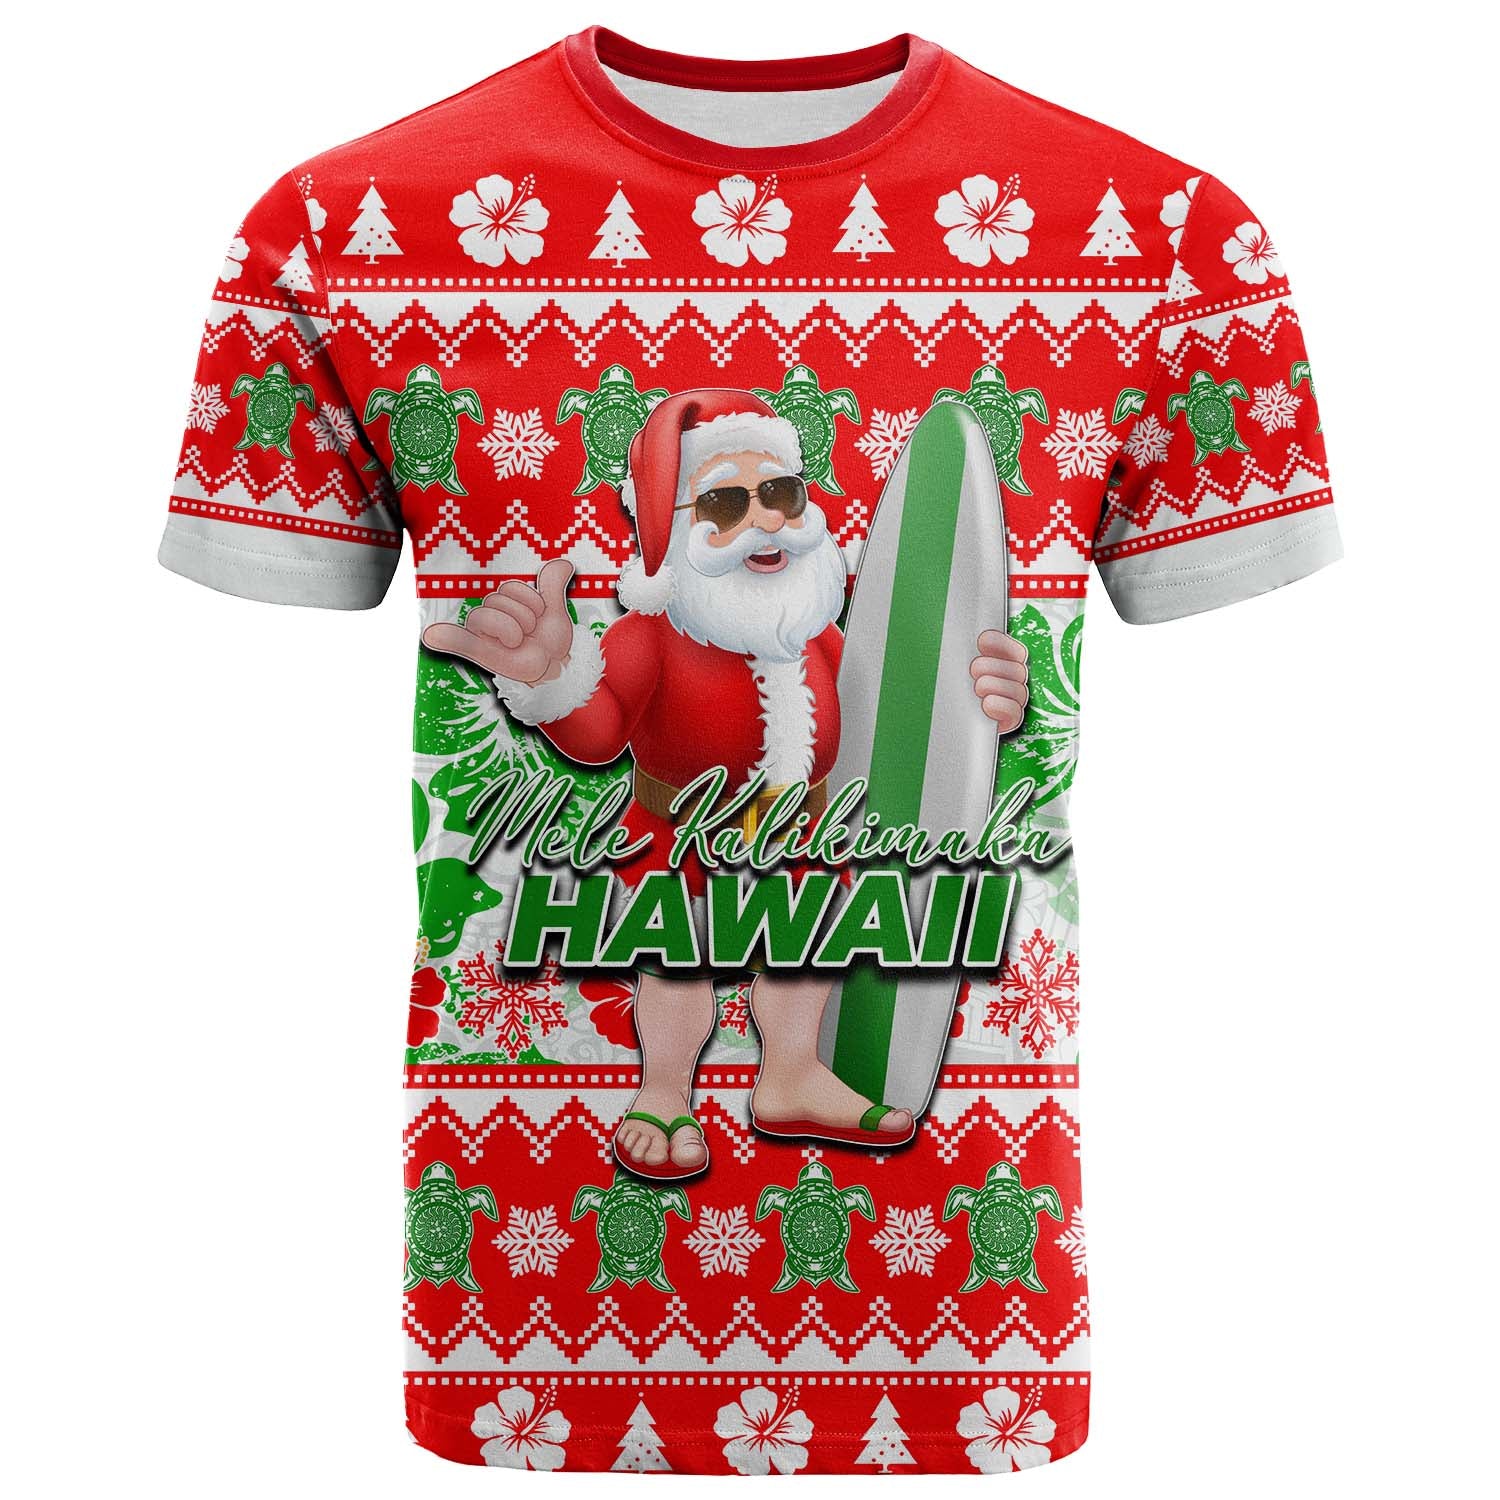 Hawaii Mele Kalikimaka Christmas T Shirt Cool Santa Claus LT6 Unisex Red - Polynesian Pride